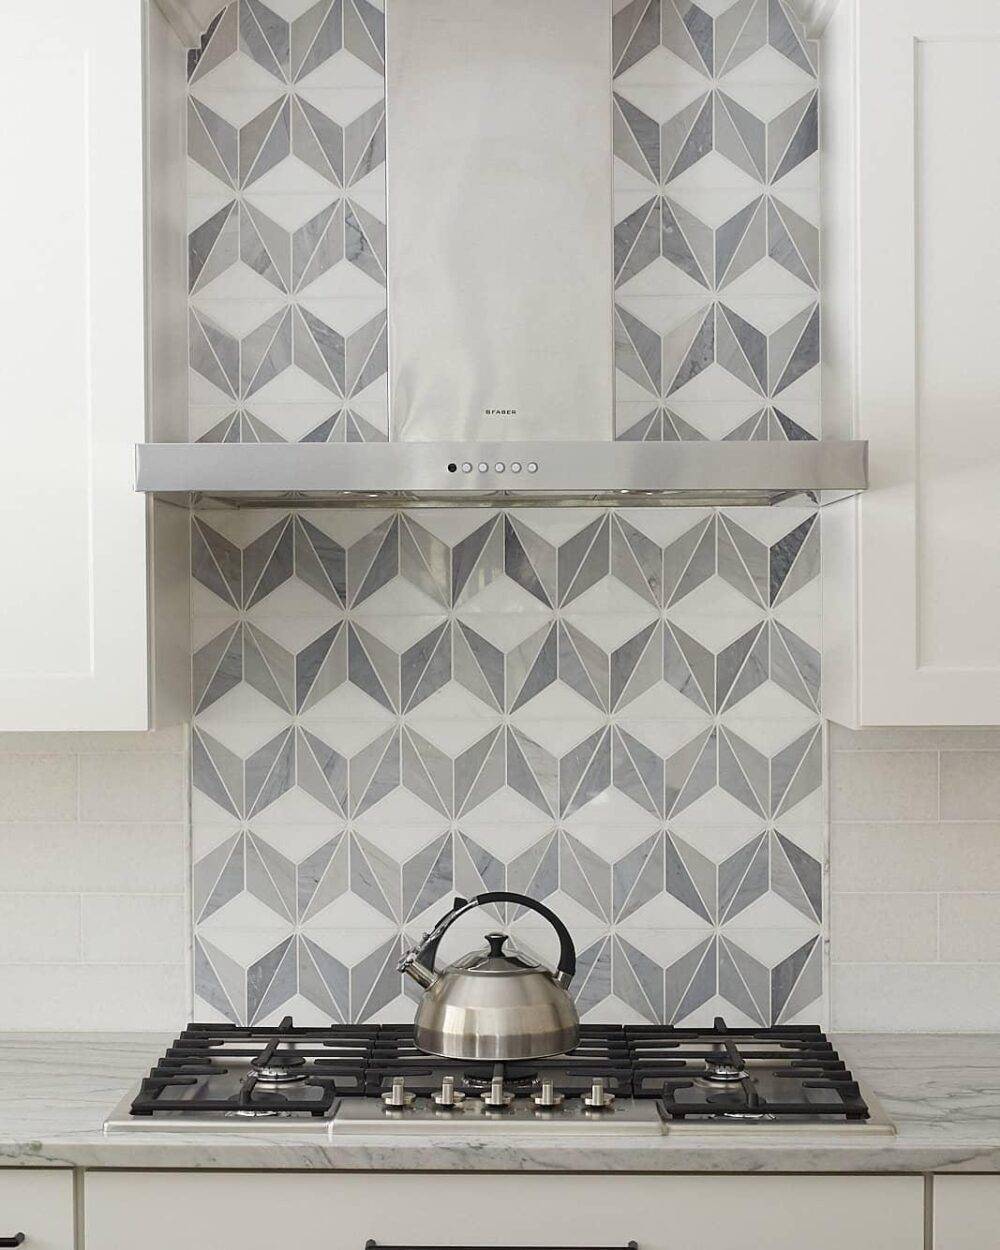 White and grey tile in a pattern kitchen stove backsplash.